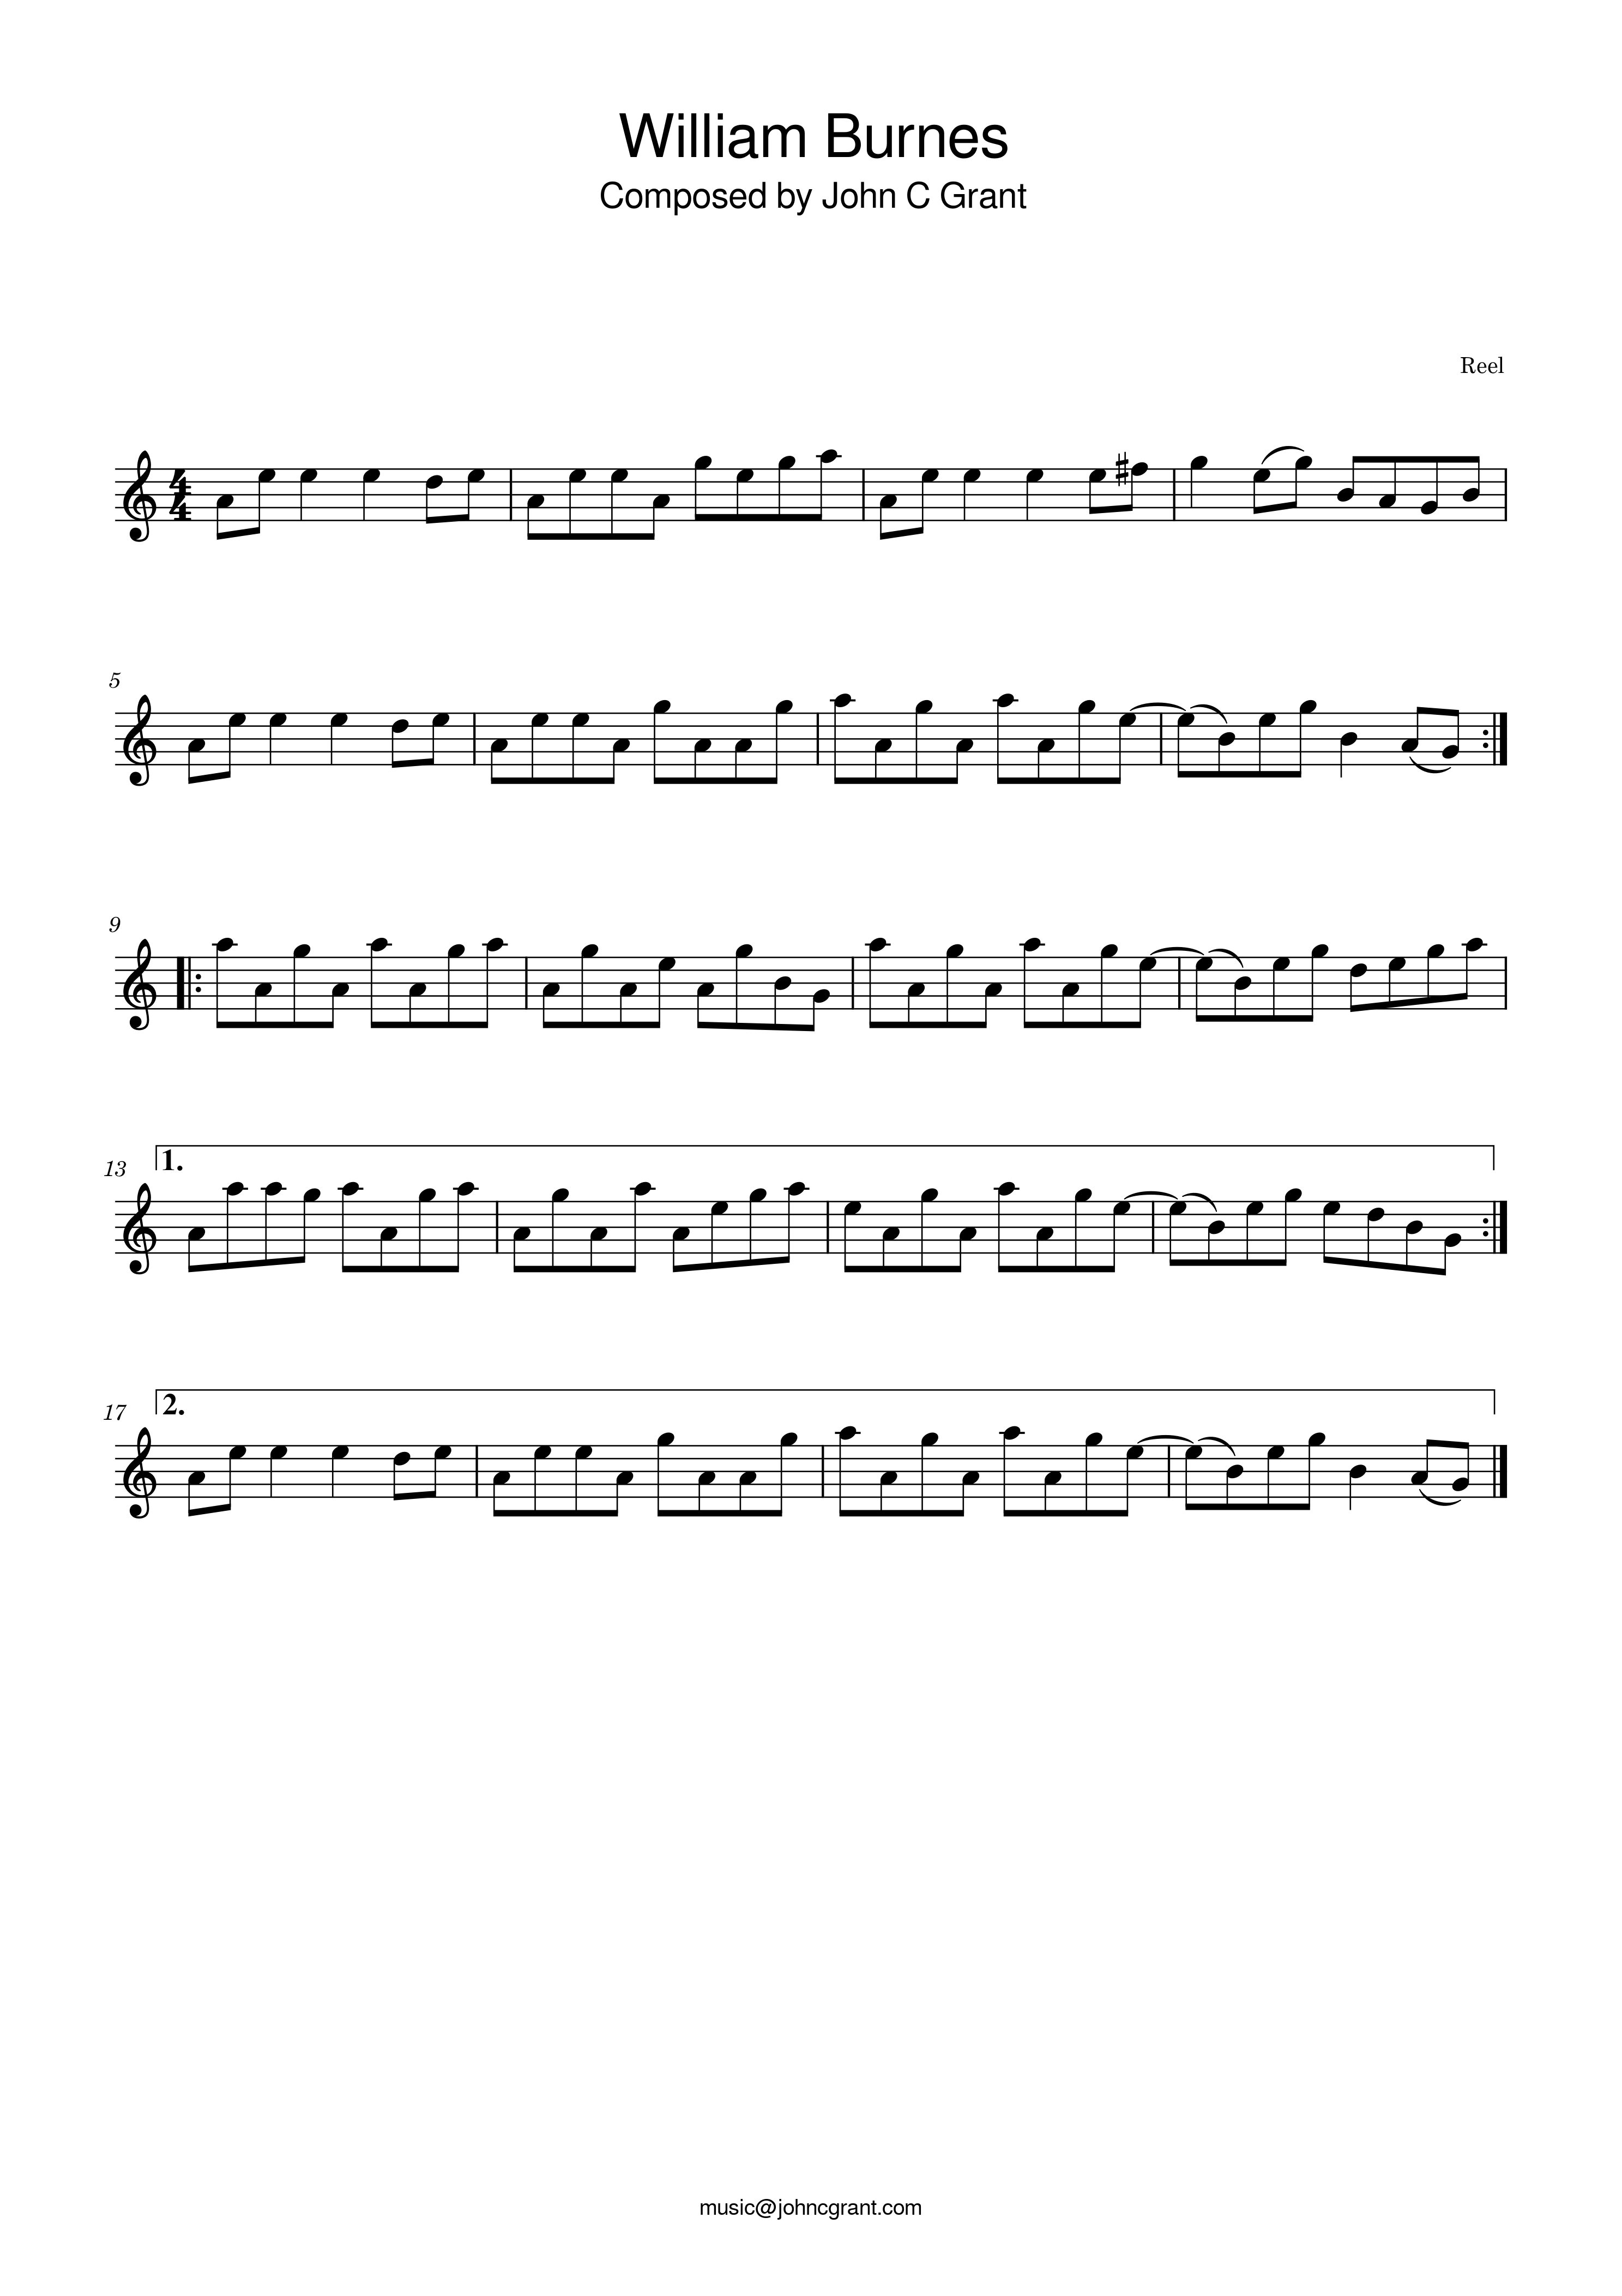 William Burnes - Composed by John C Grant (https://johncgrant.com). Traditional composer from Kilmarnock, Ayrshire, Scotland.